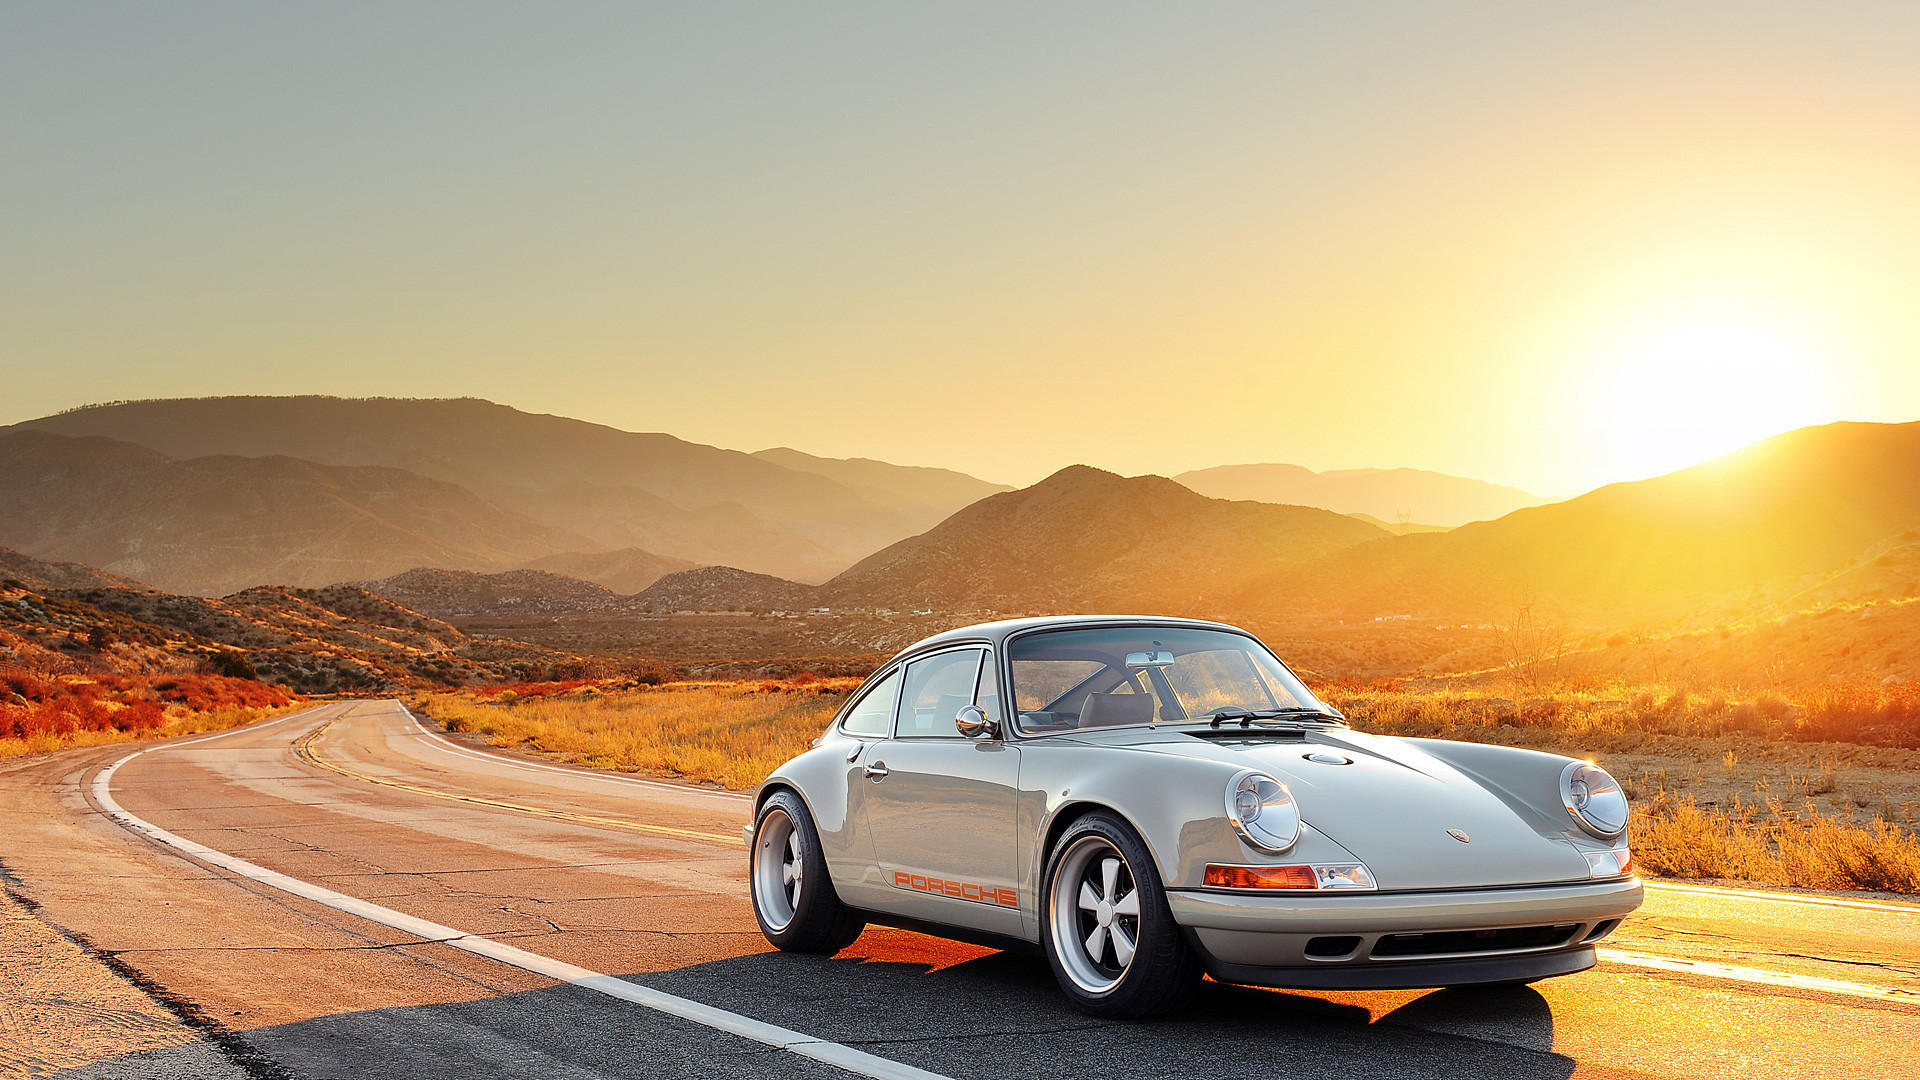 1920x1080  Download Wallpaper Porsche, 911, Side view, Sunset, Road .